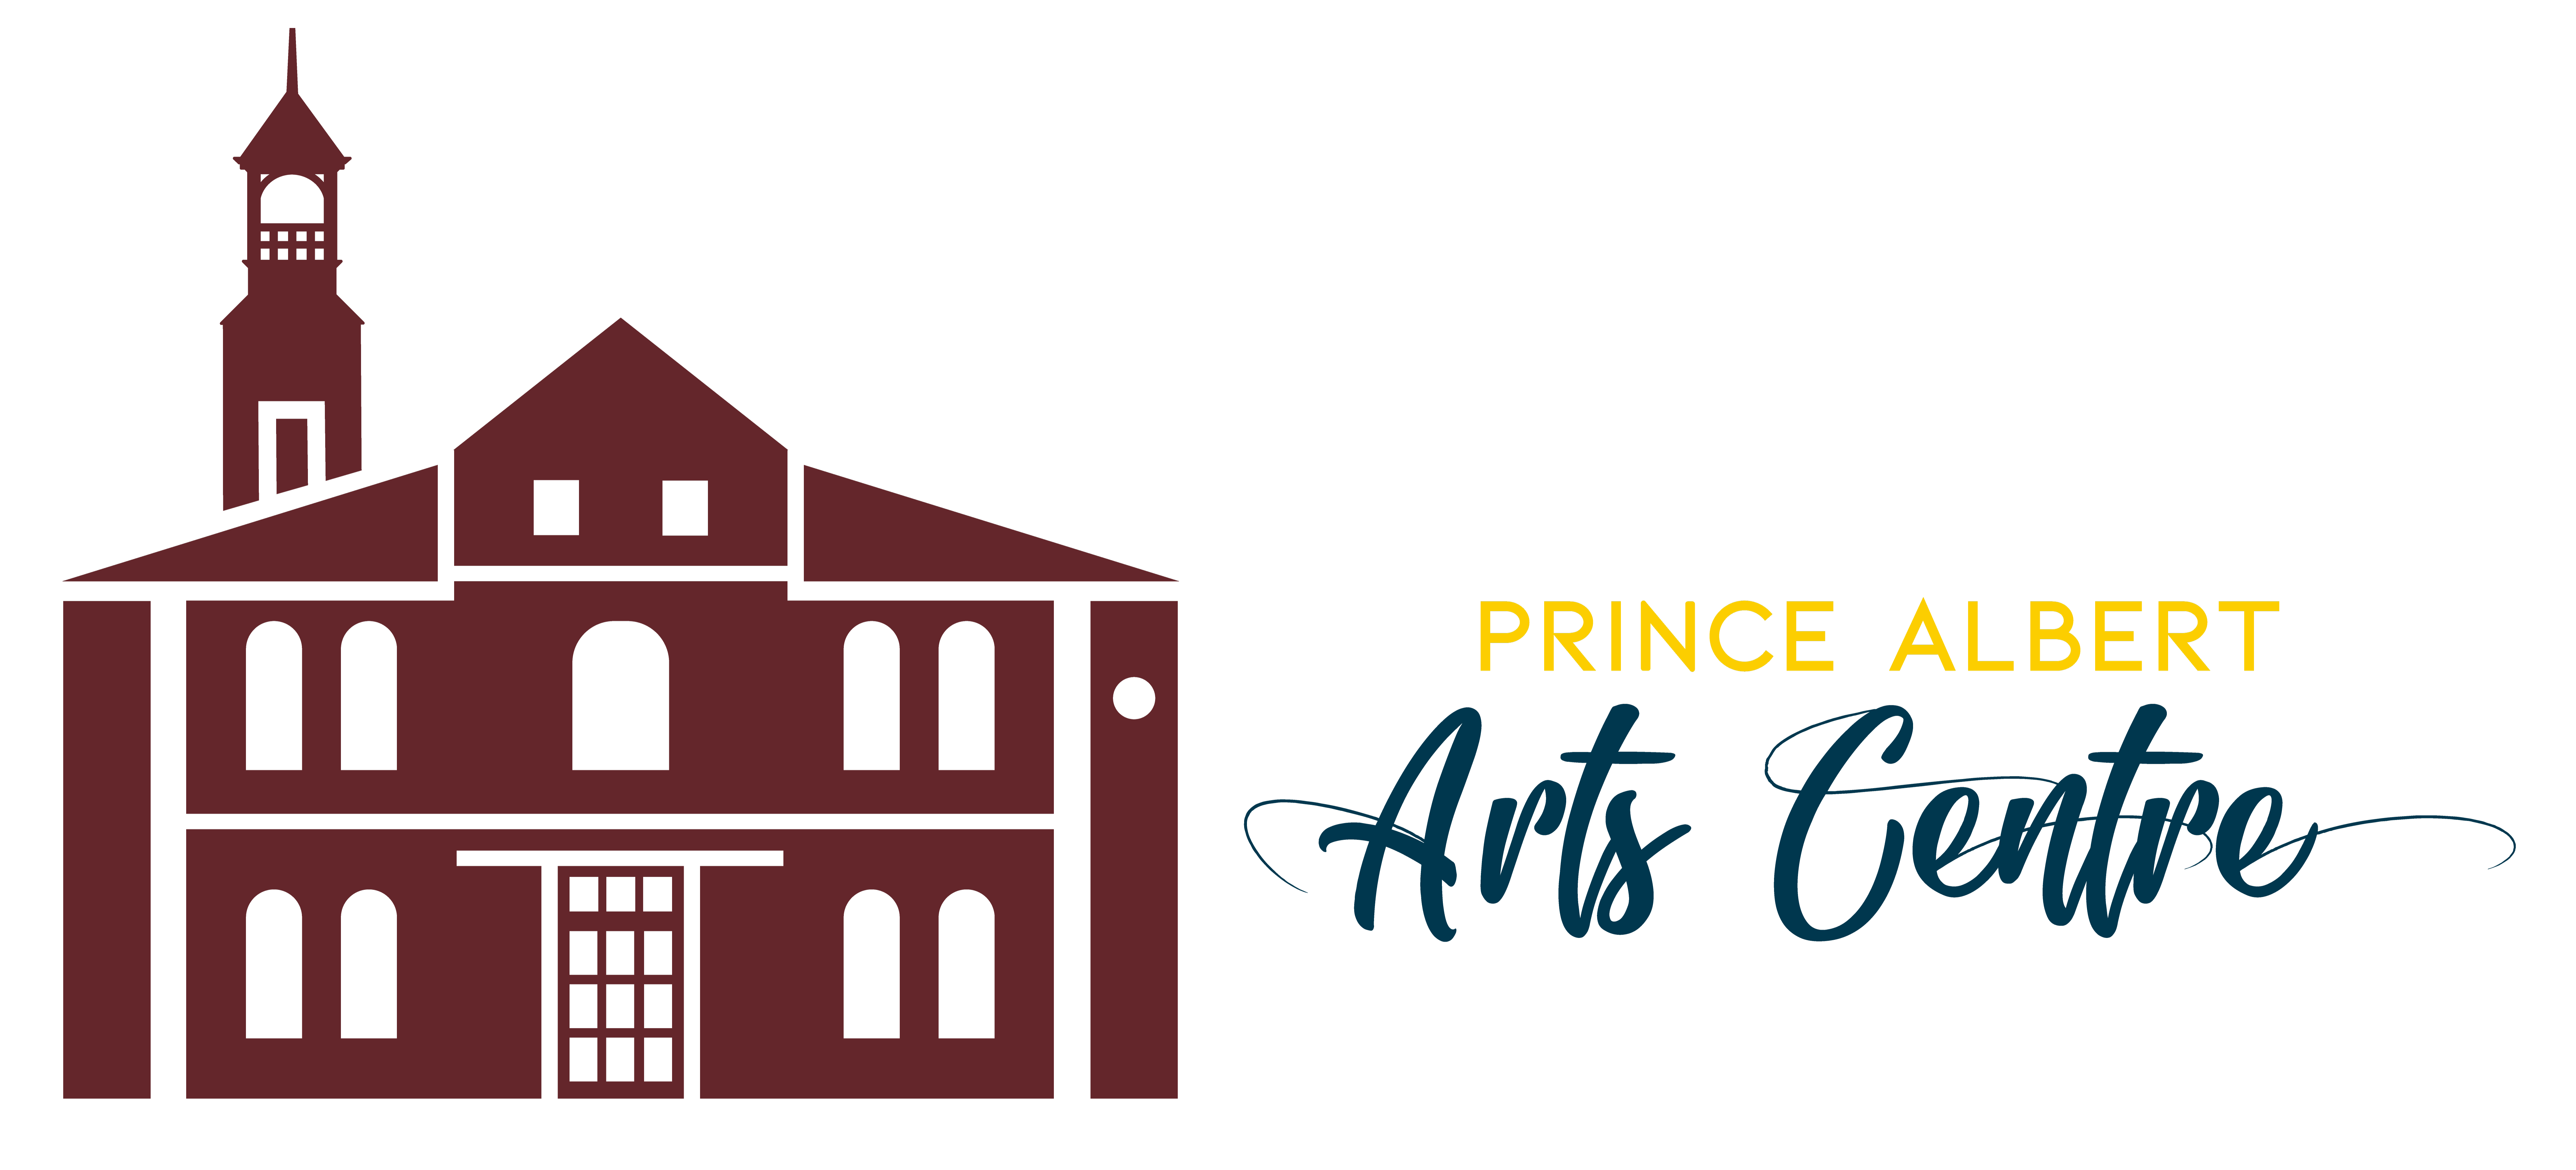 Prince Albert Arts Centre logo